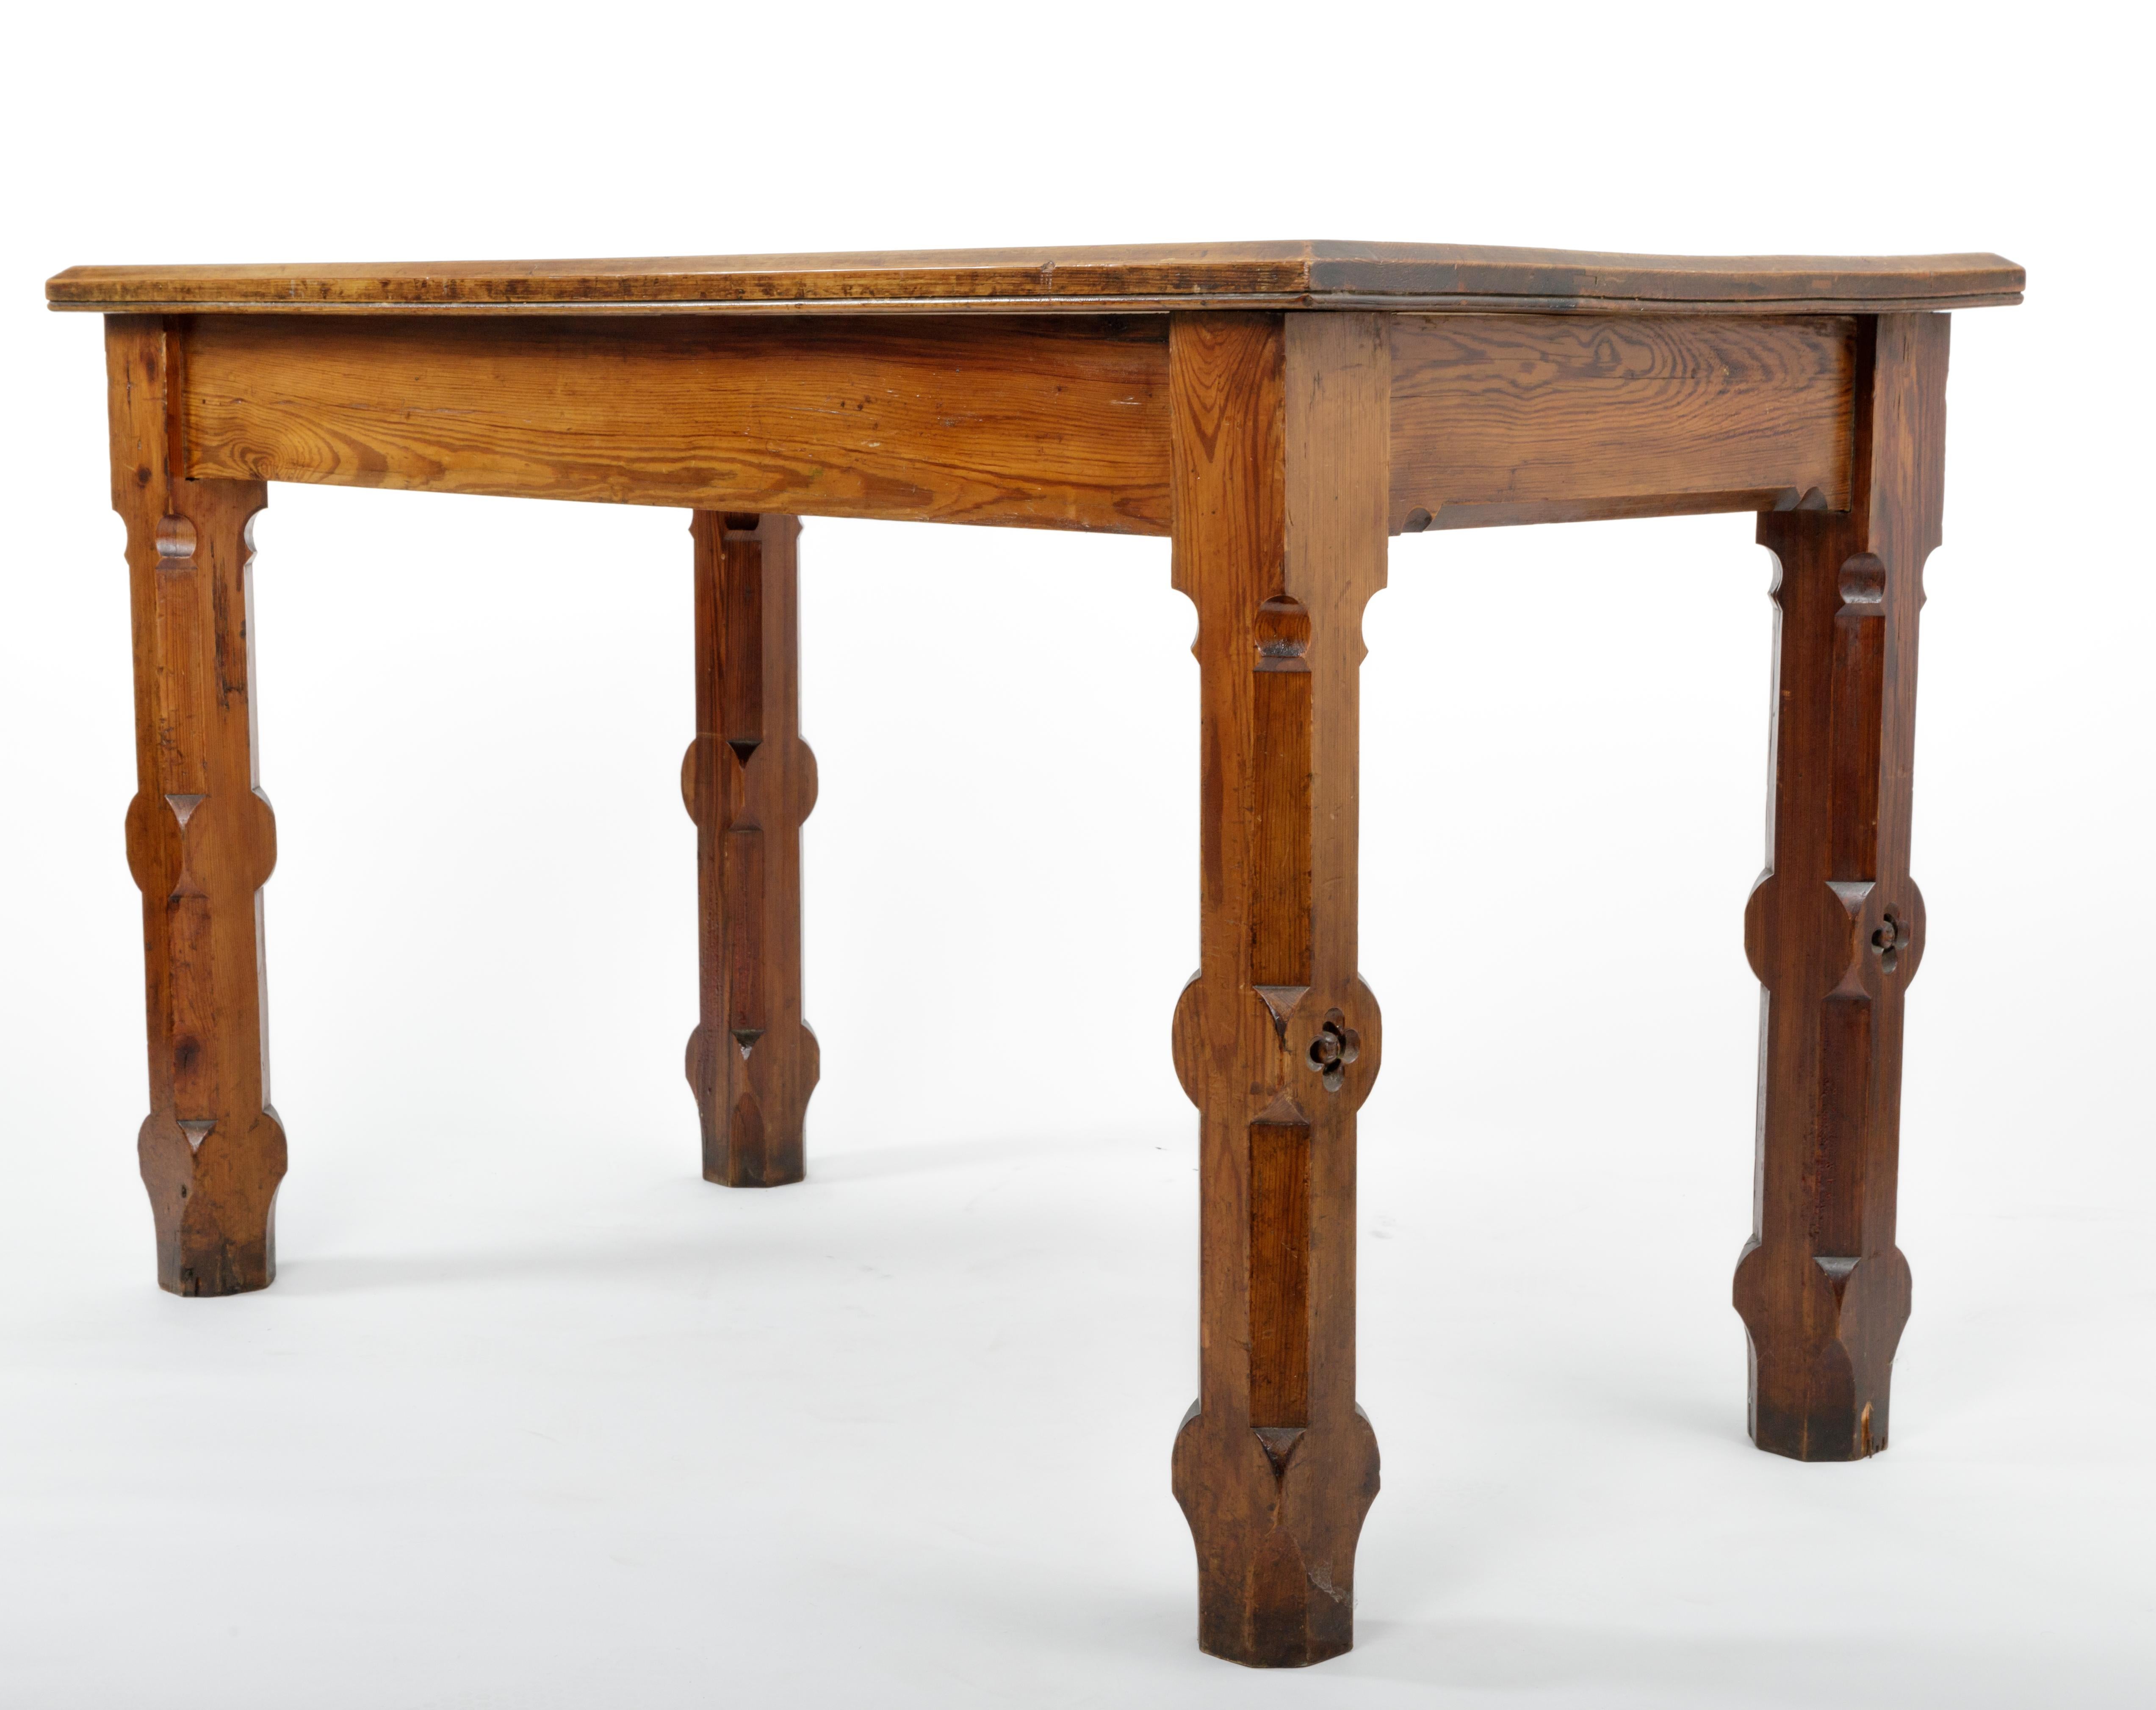 Pugin style English pine table, England, 19th century.